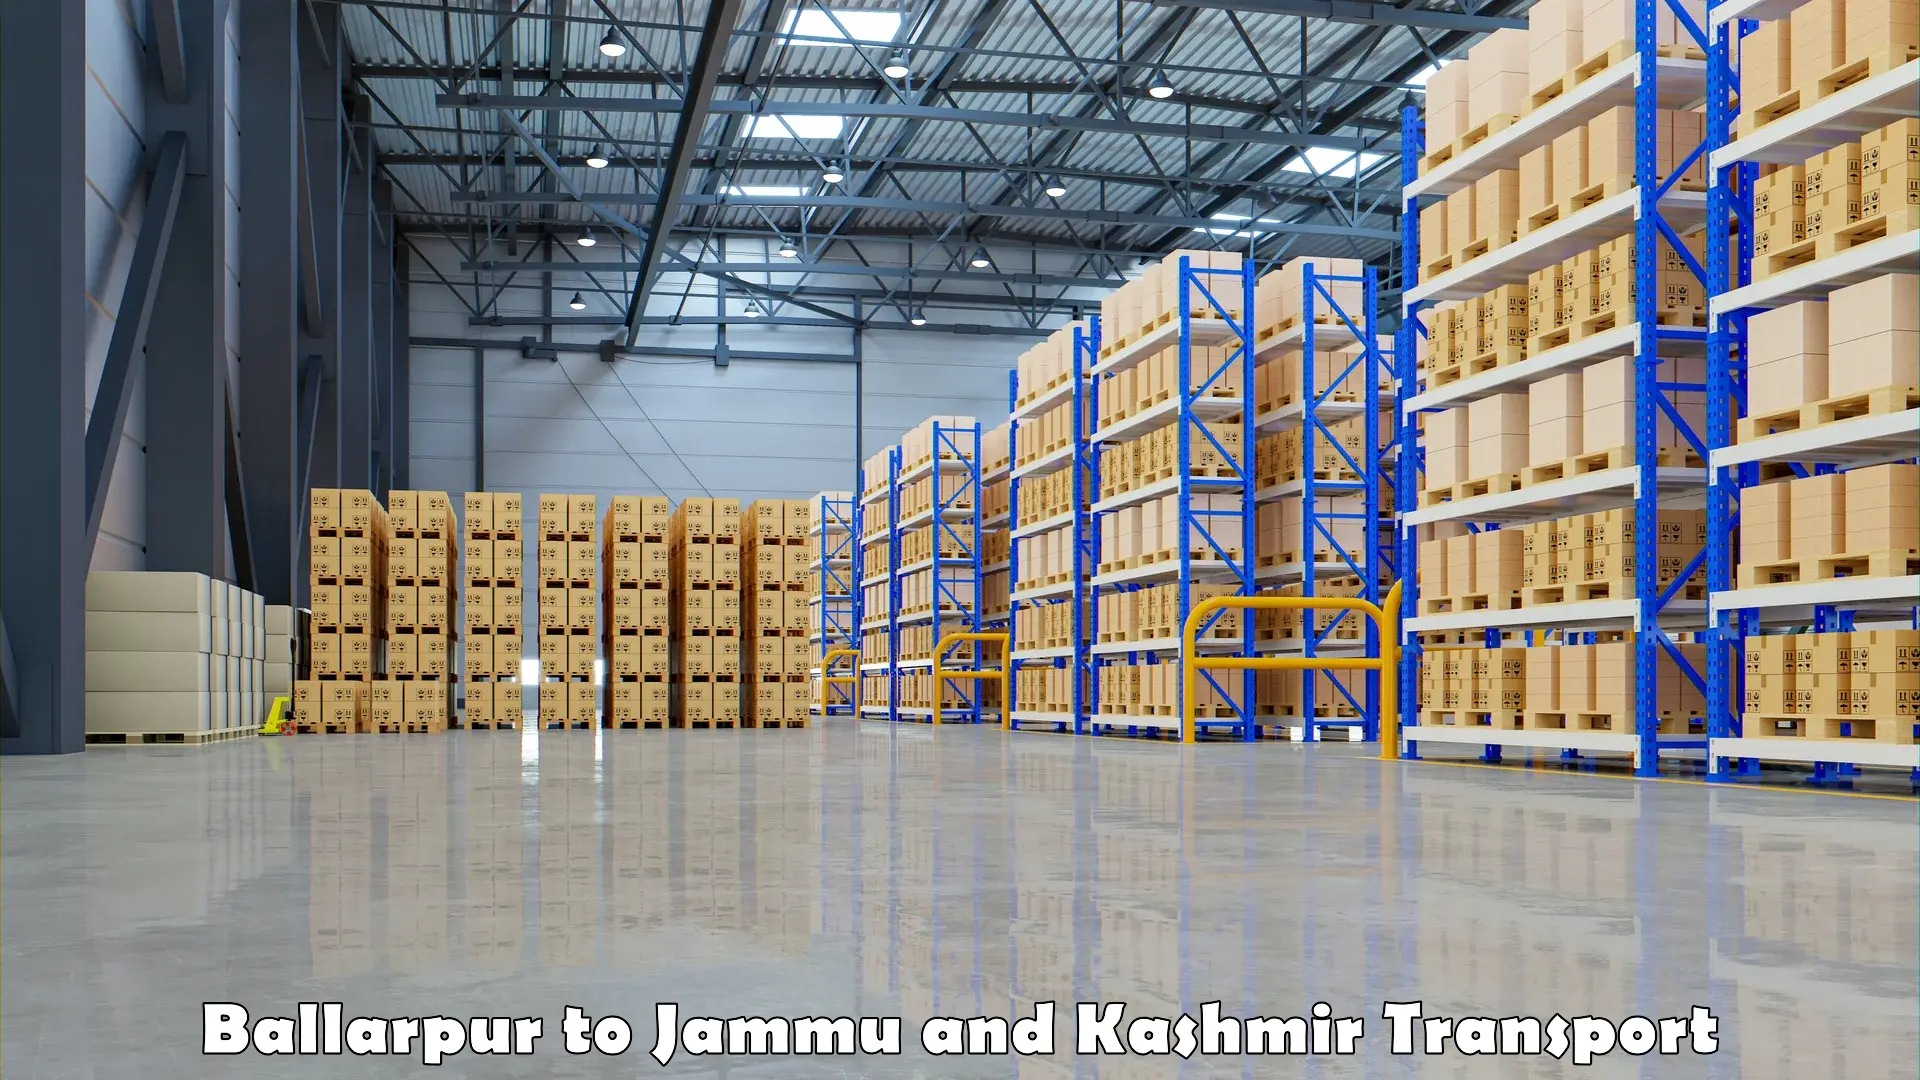 Transport in sharing Ballarpur to Jammu and Kashmir